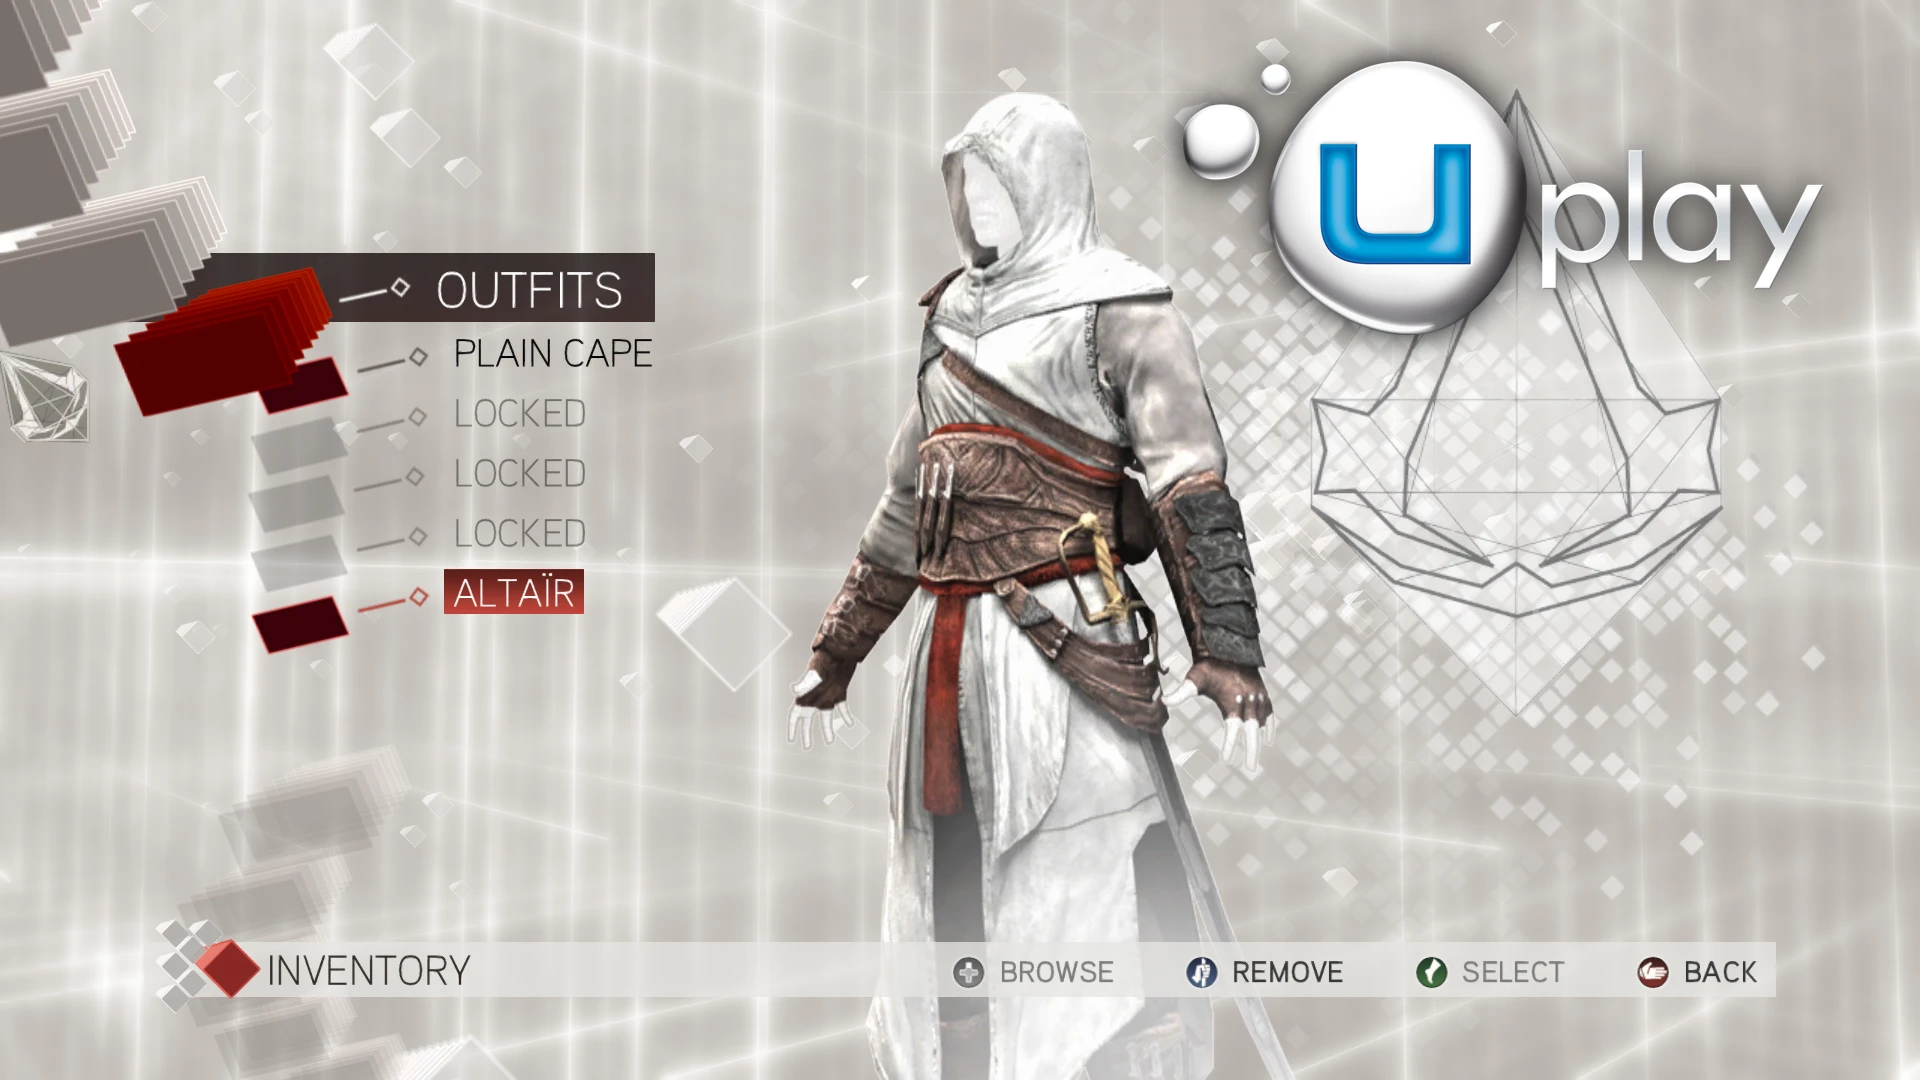 Юбисофт коннект ассасин. Награды Ubisoft connect Assassin's Creed 4. Лзвткрлв ги 15 Assassin's Creed 2. Ассасин Крид 2 ввести пароль 867. Вести пароль в ассасин Крид 2.